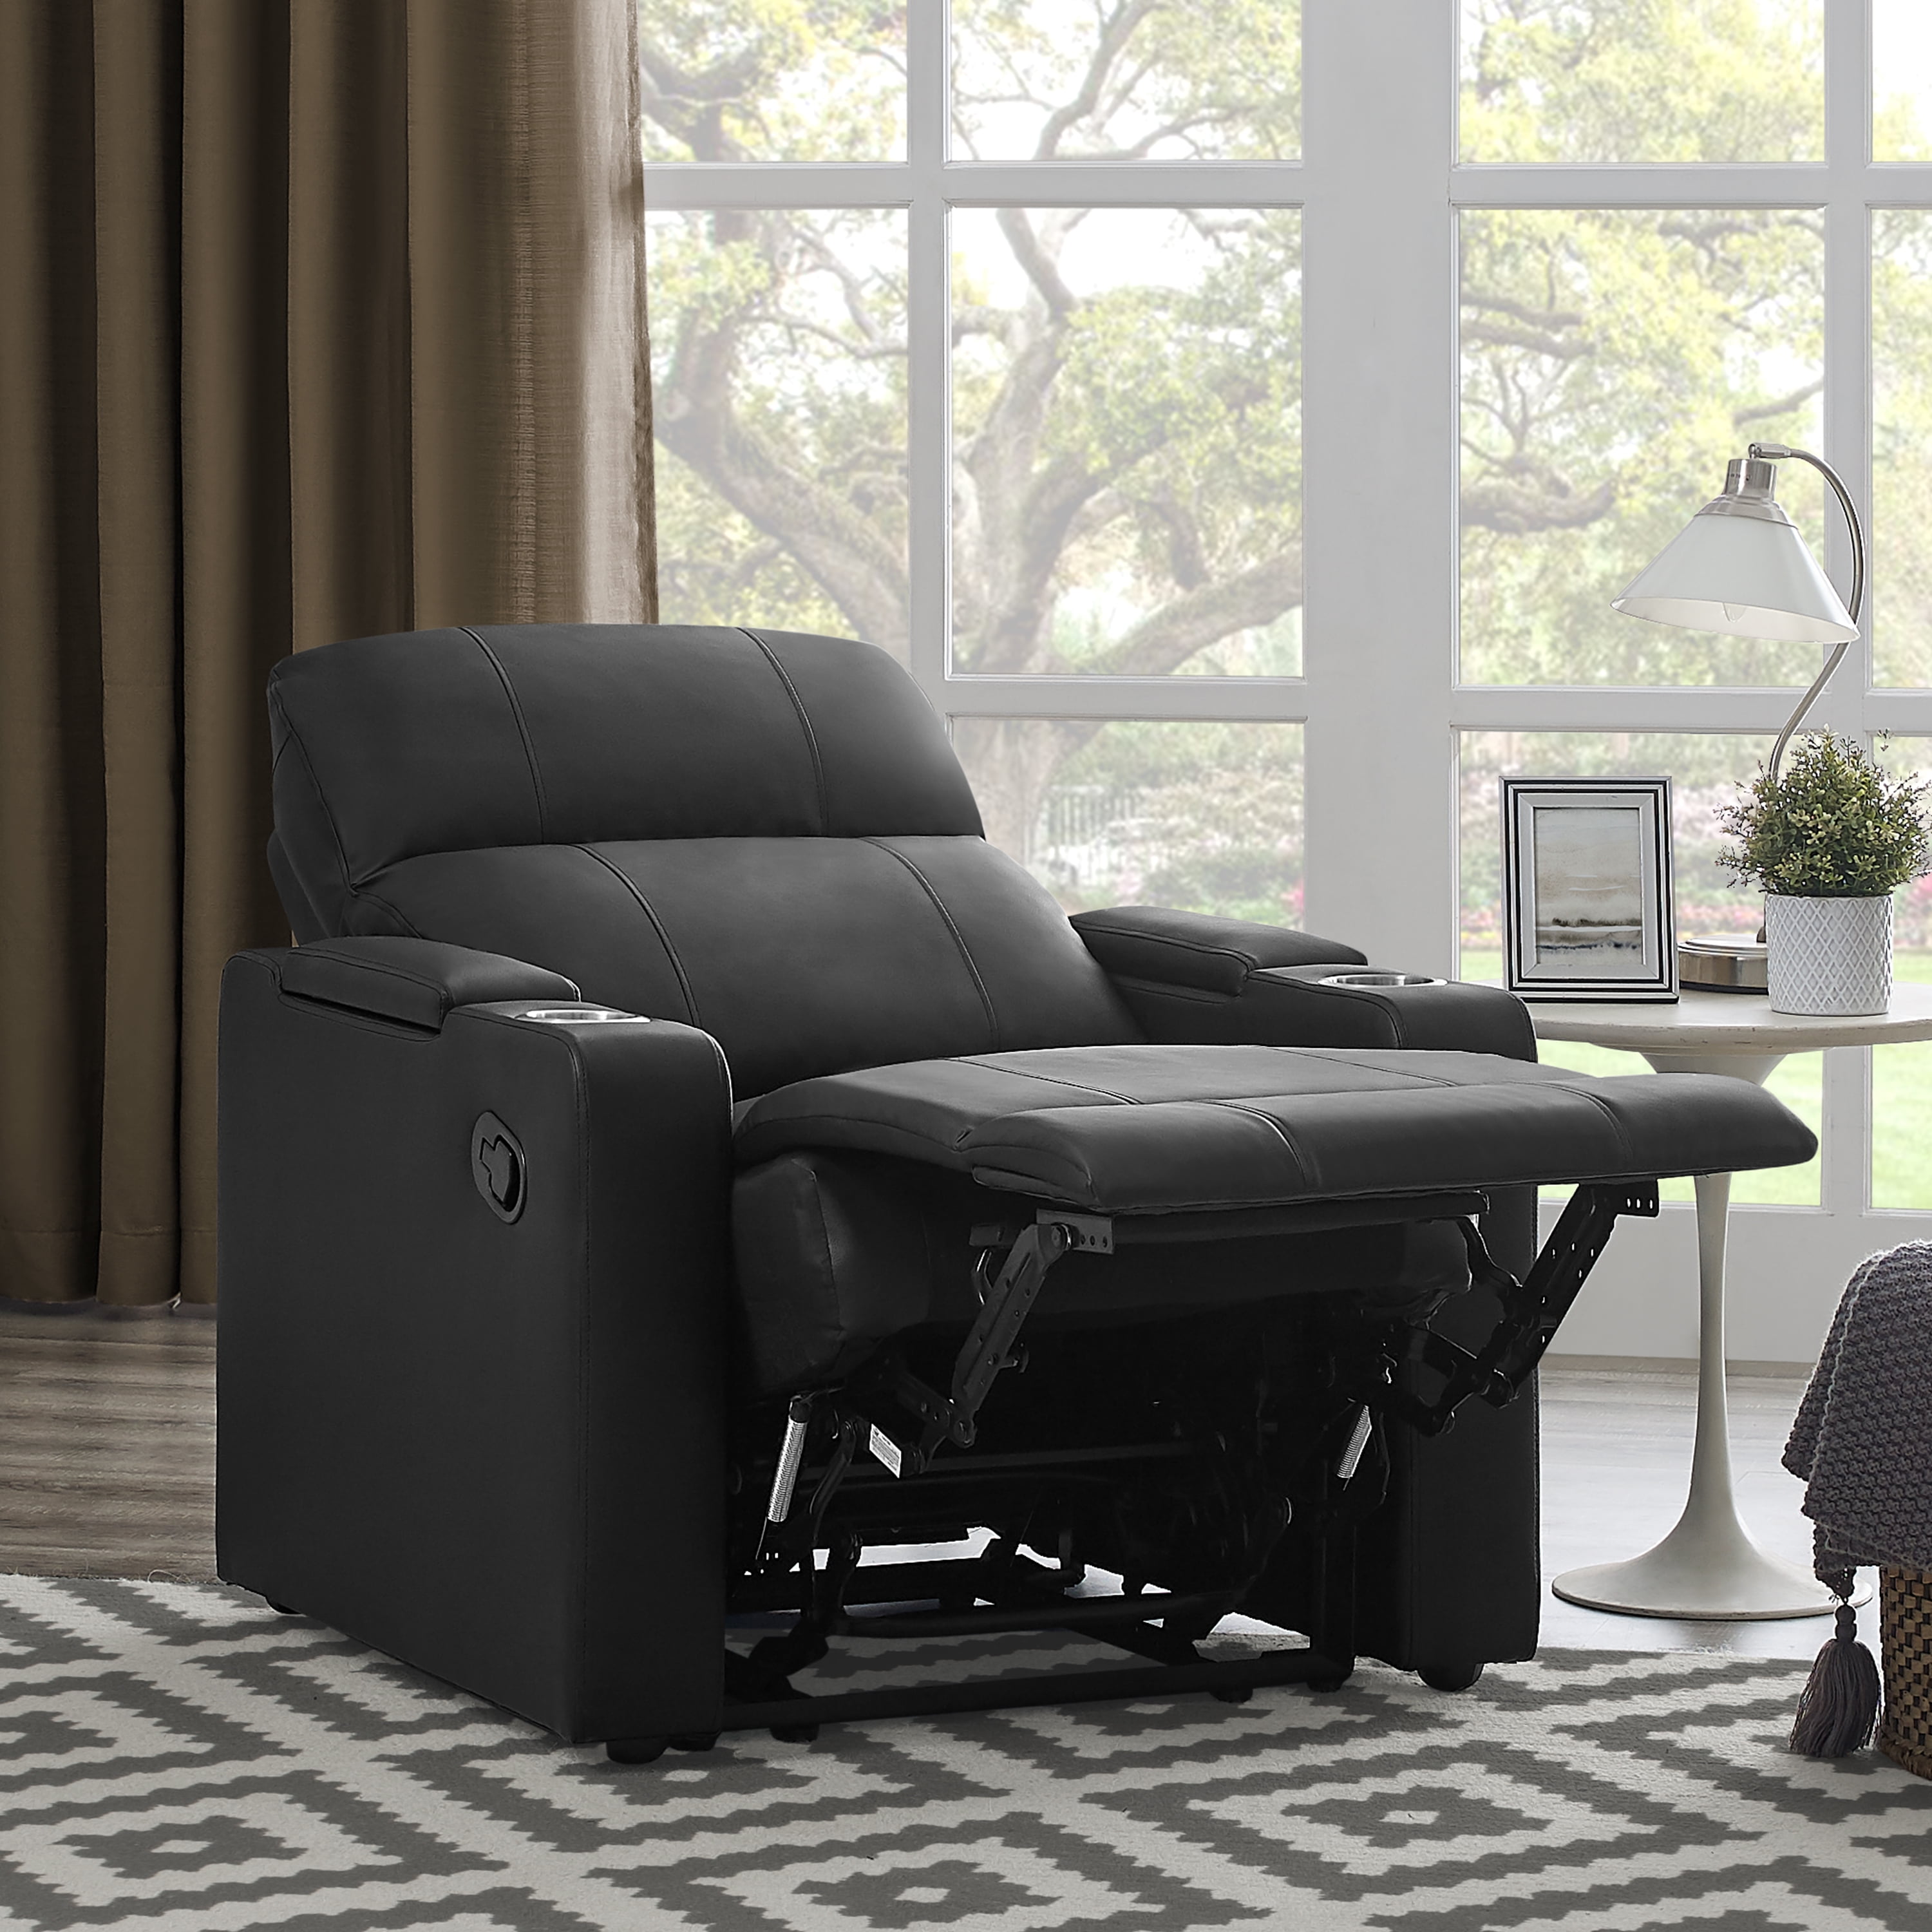 UR livingroom Genuine Leather Dual Power Recliner Chair with Adjustable  Headrest,USB C Charger,Type C Port (Hubert, Brown)